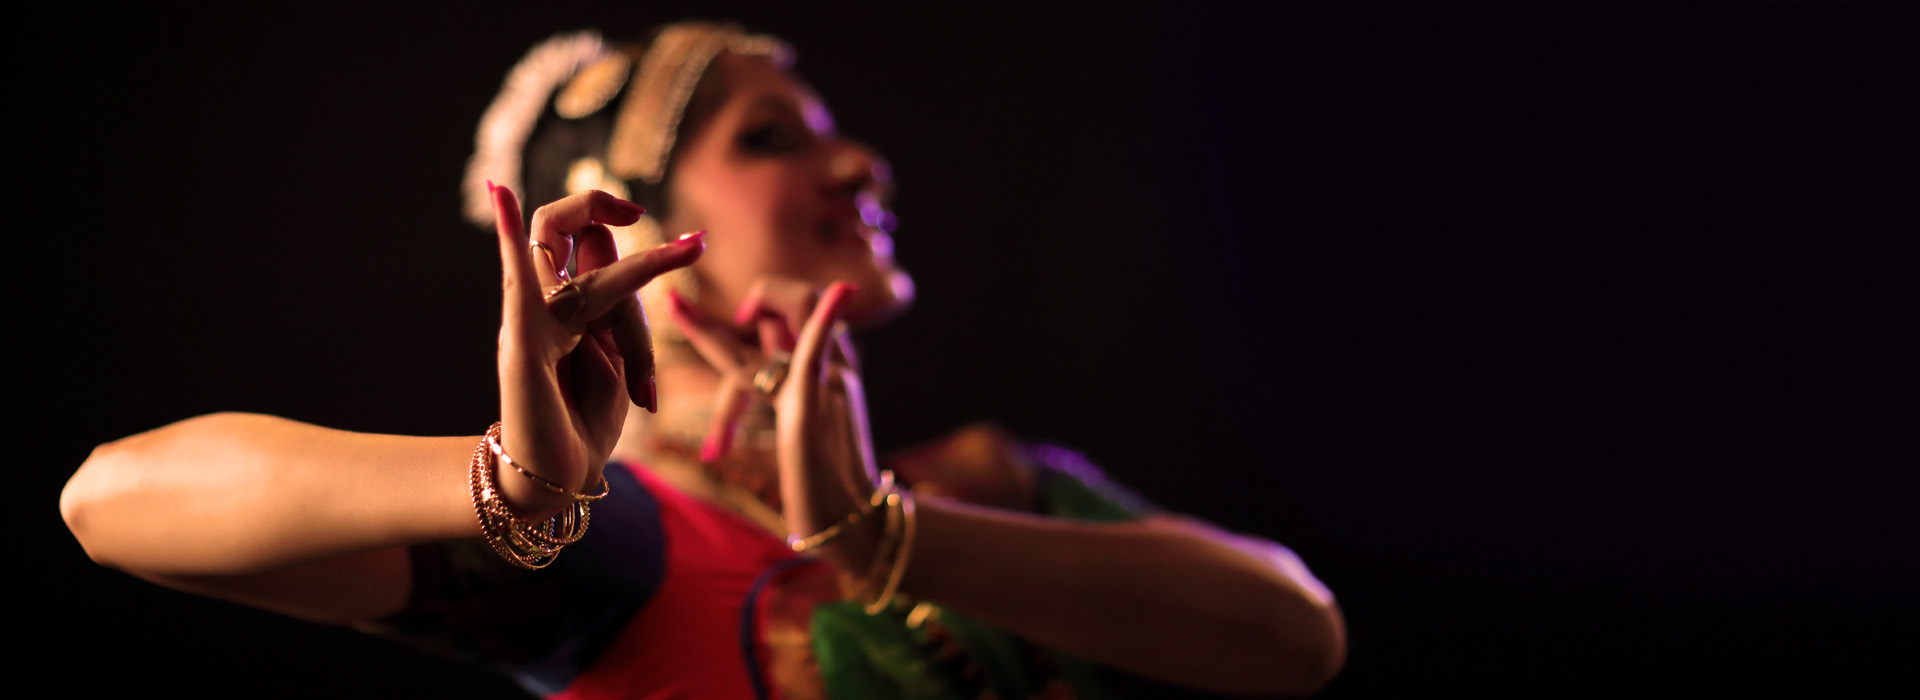 Indian Classical Dance Photo Shoot